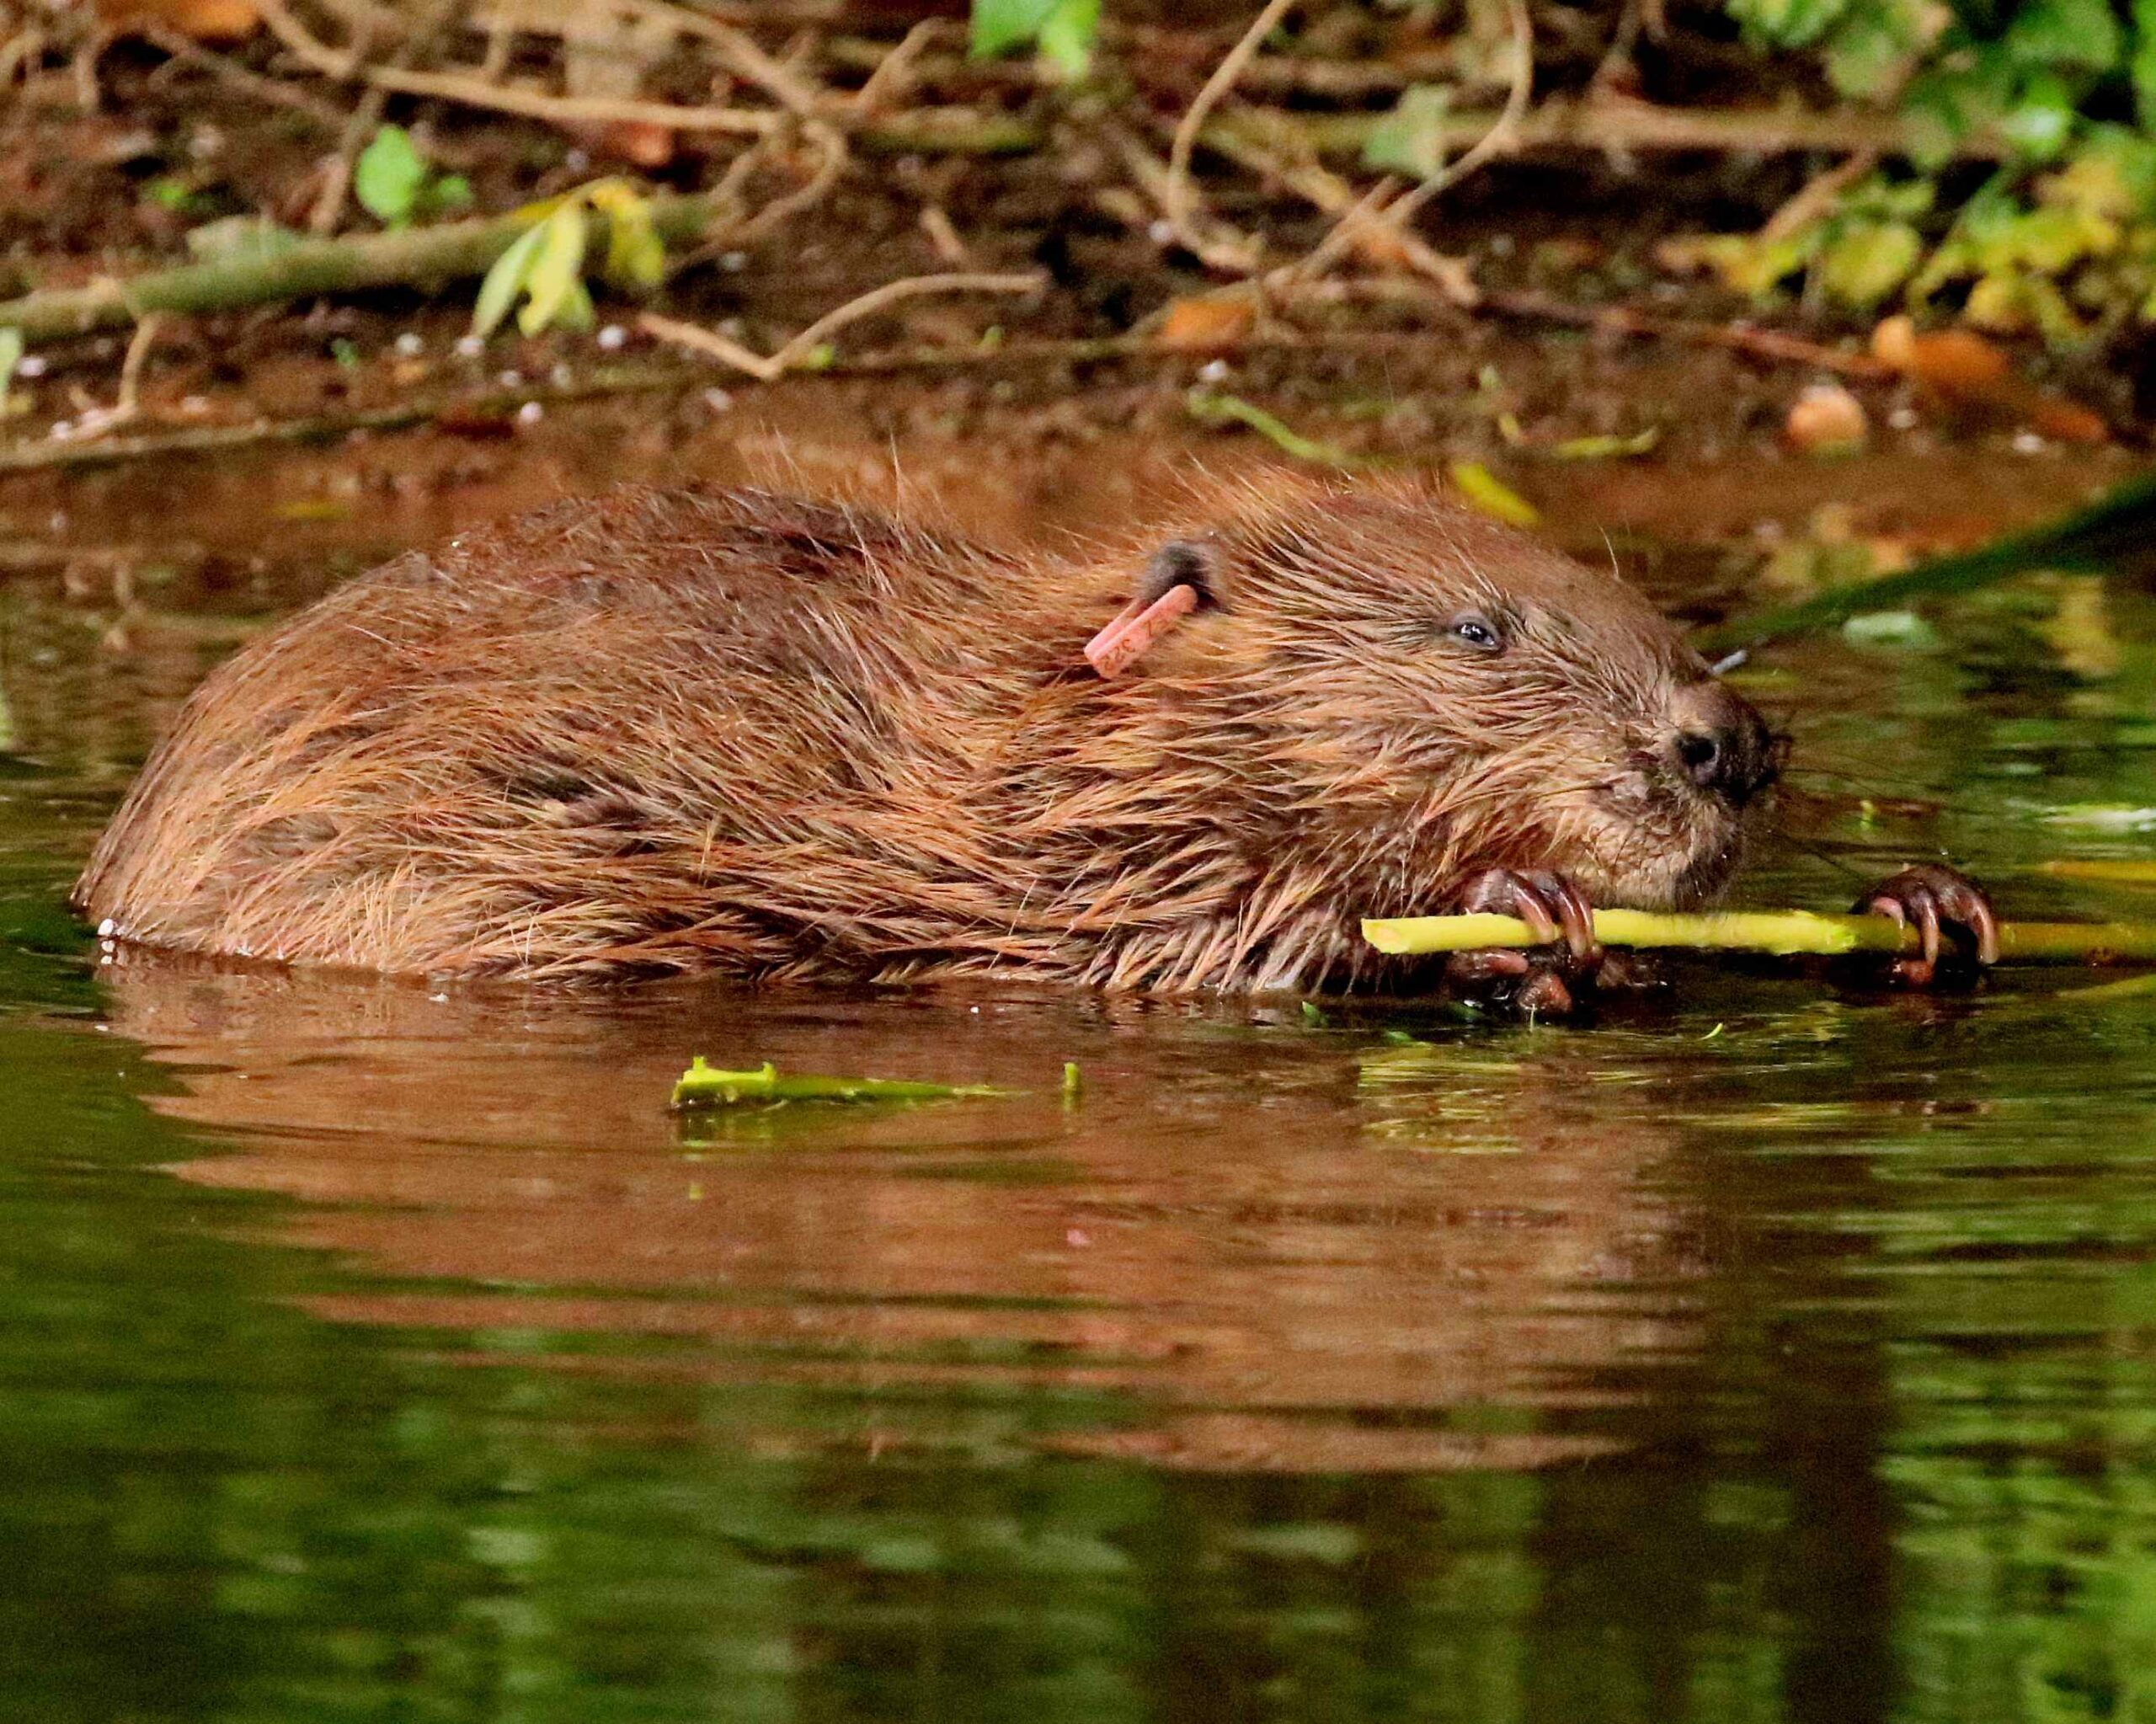 Female beaver in the river feeding on willow